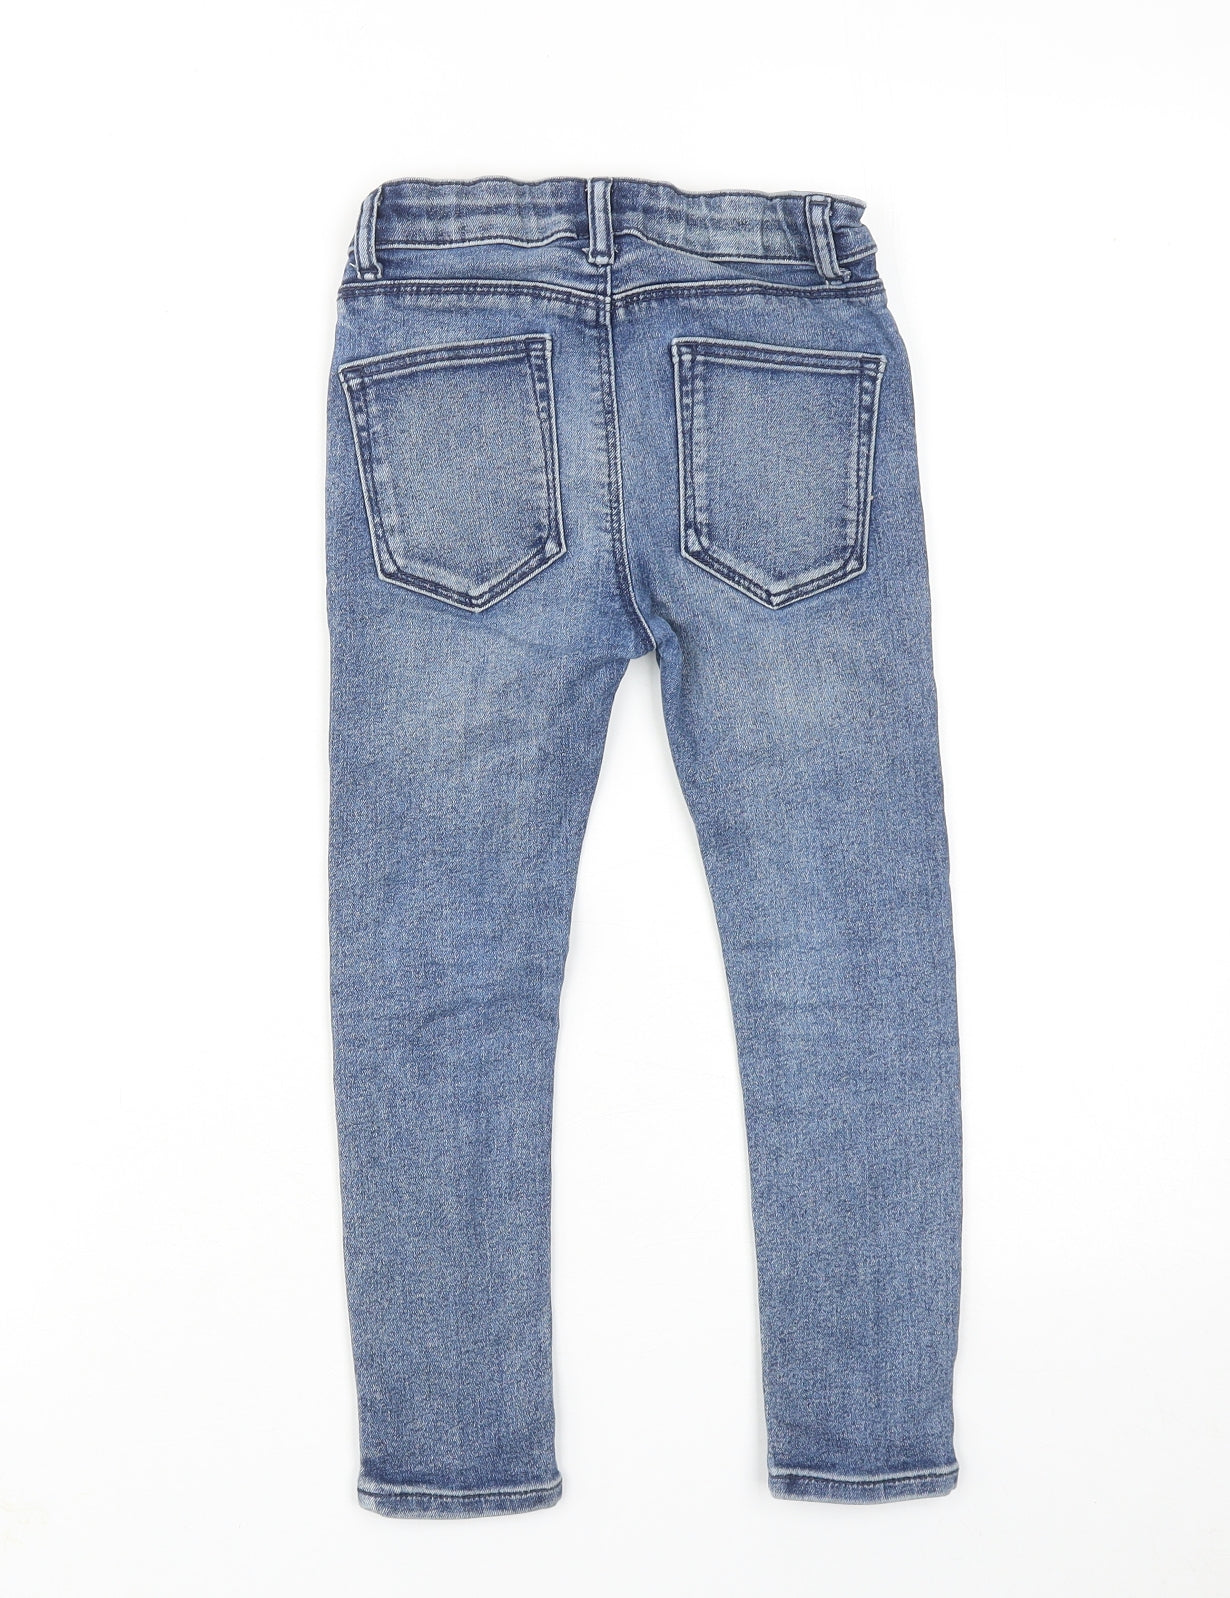 River Island Boys Blue Cotton Skinny Jeans Size 6 Years Regular Zip